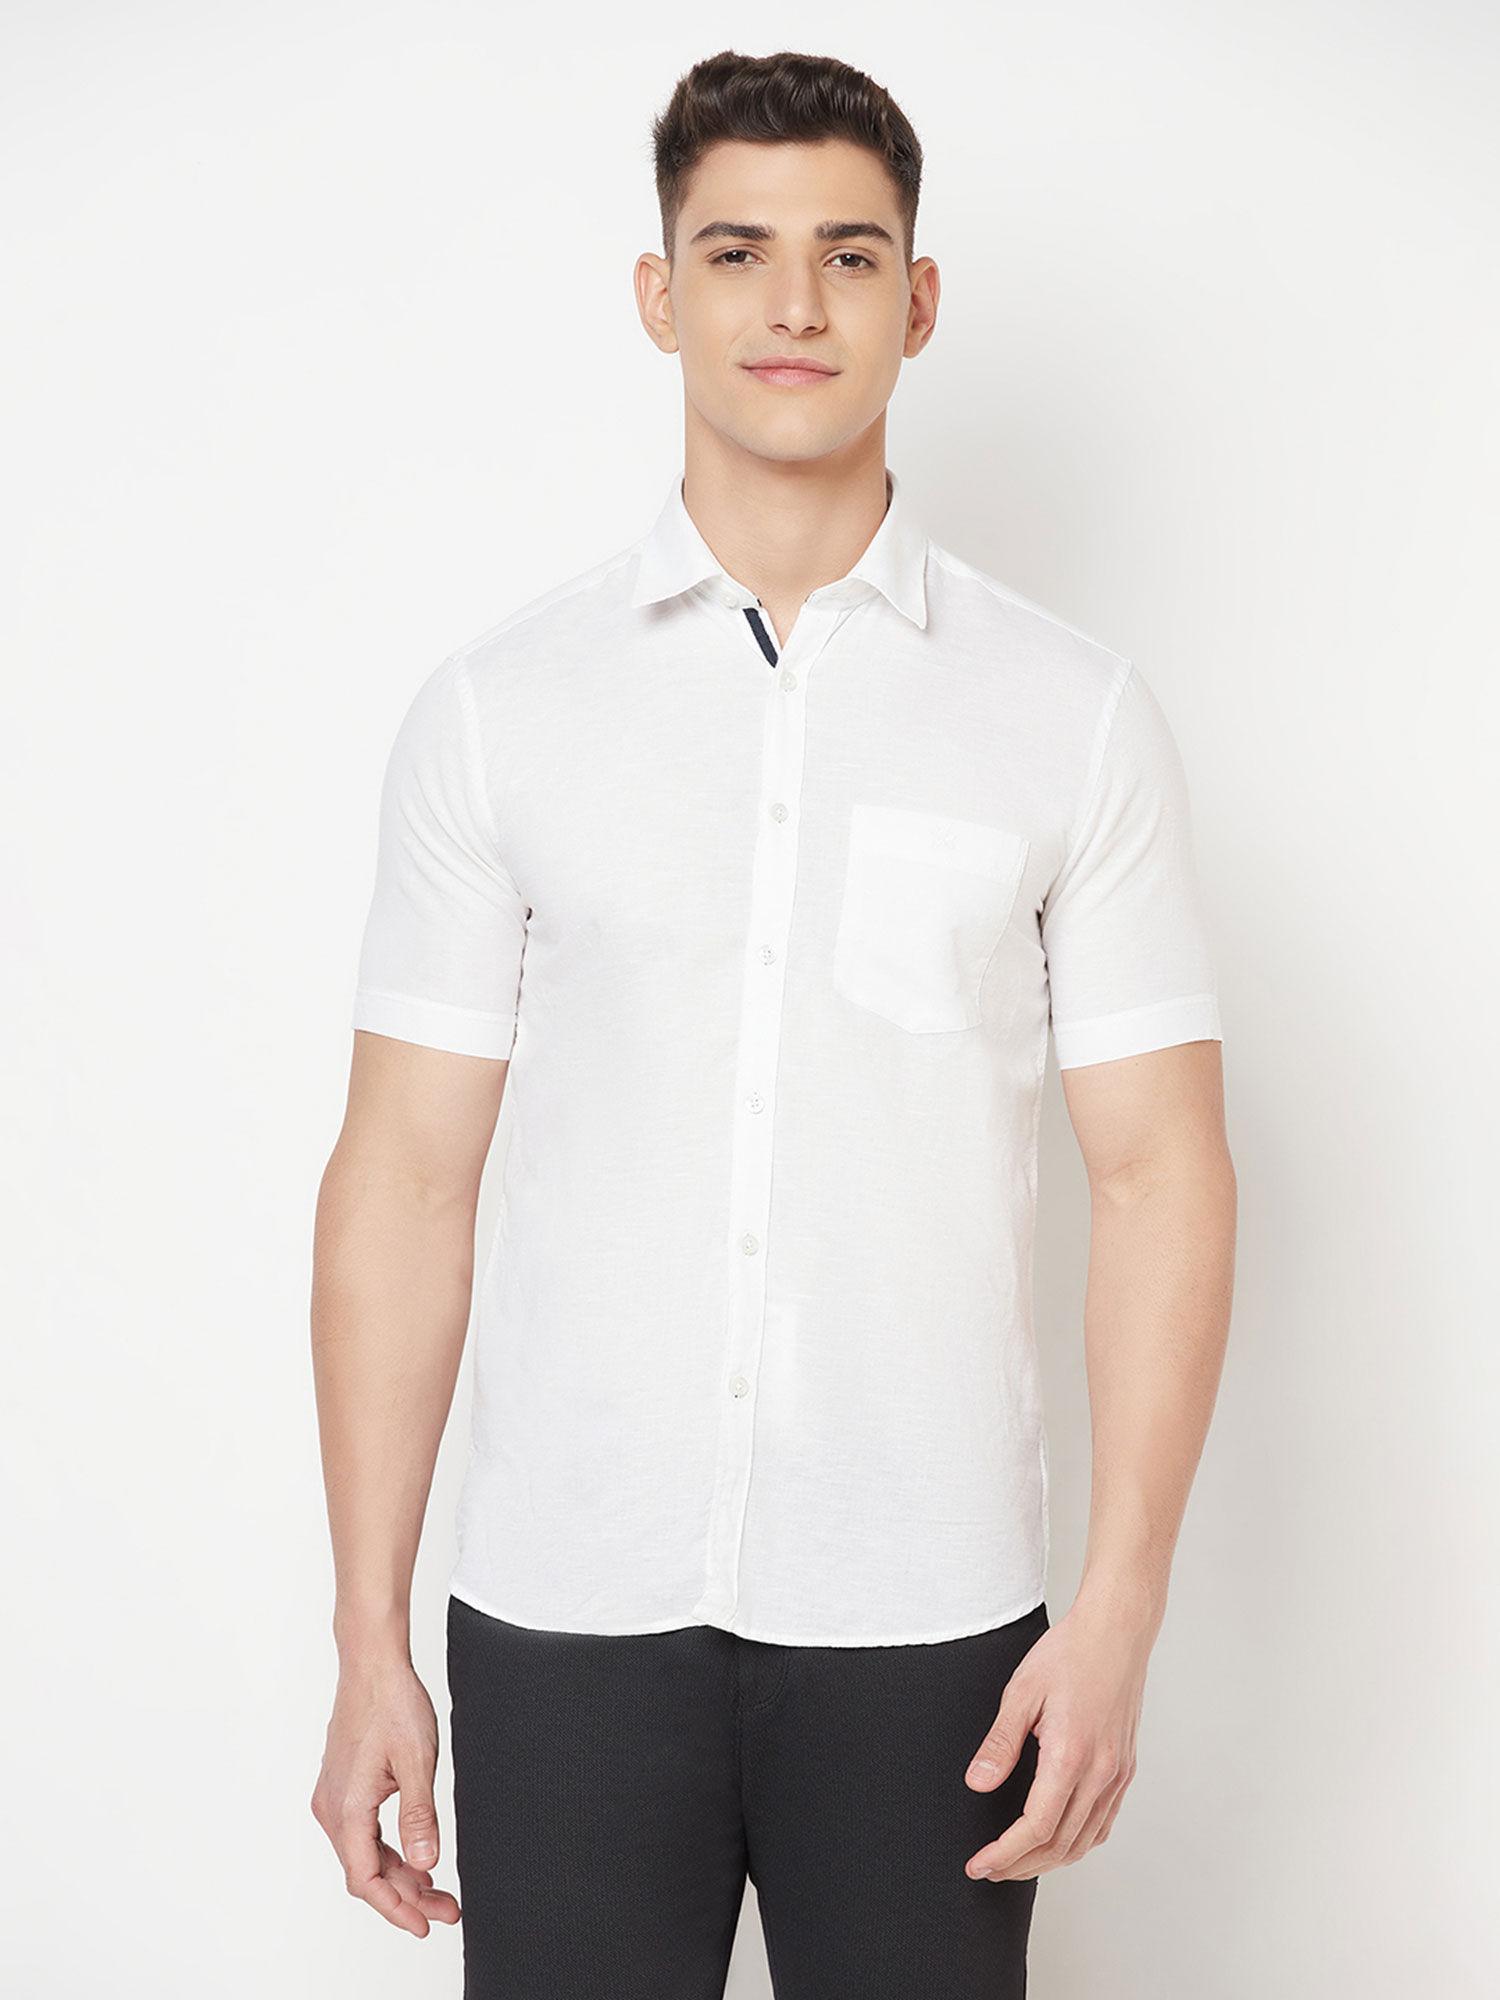 mens white solid linen shirt